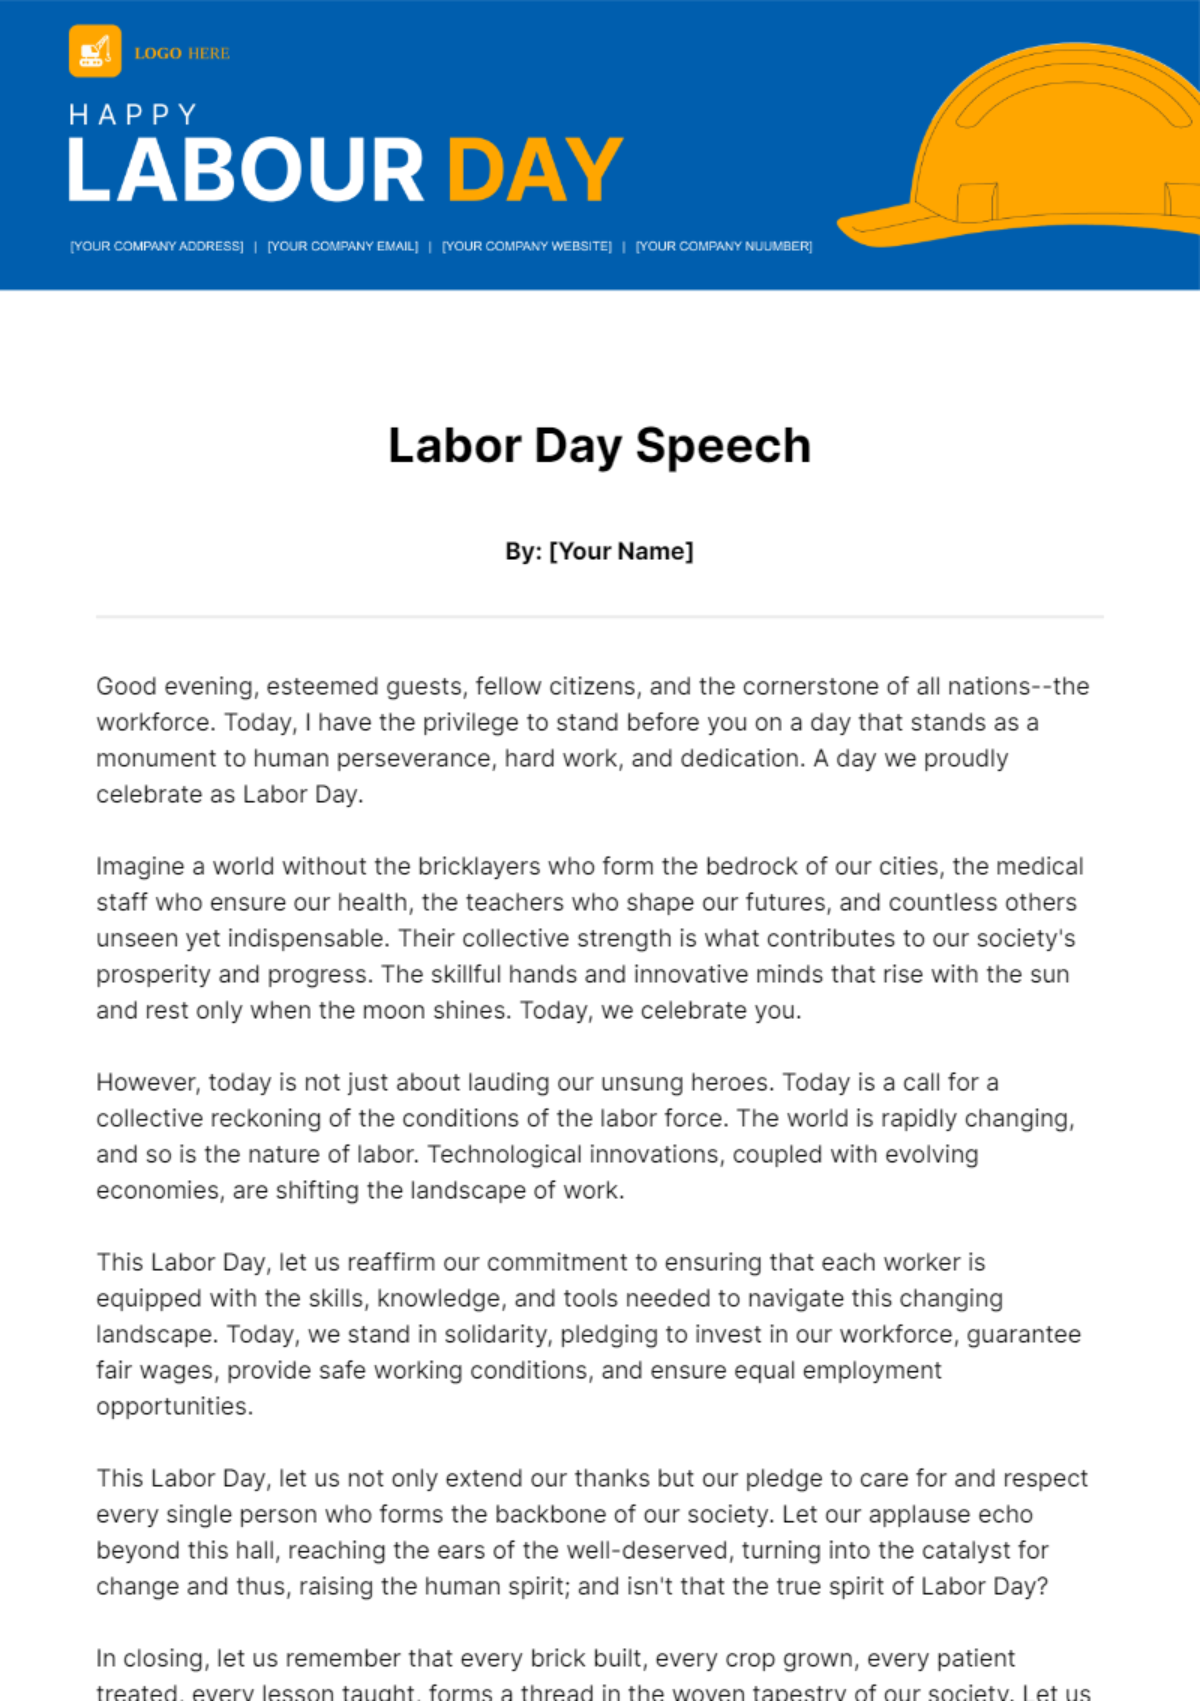 Labor Day Speech Template